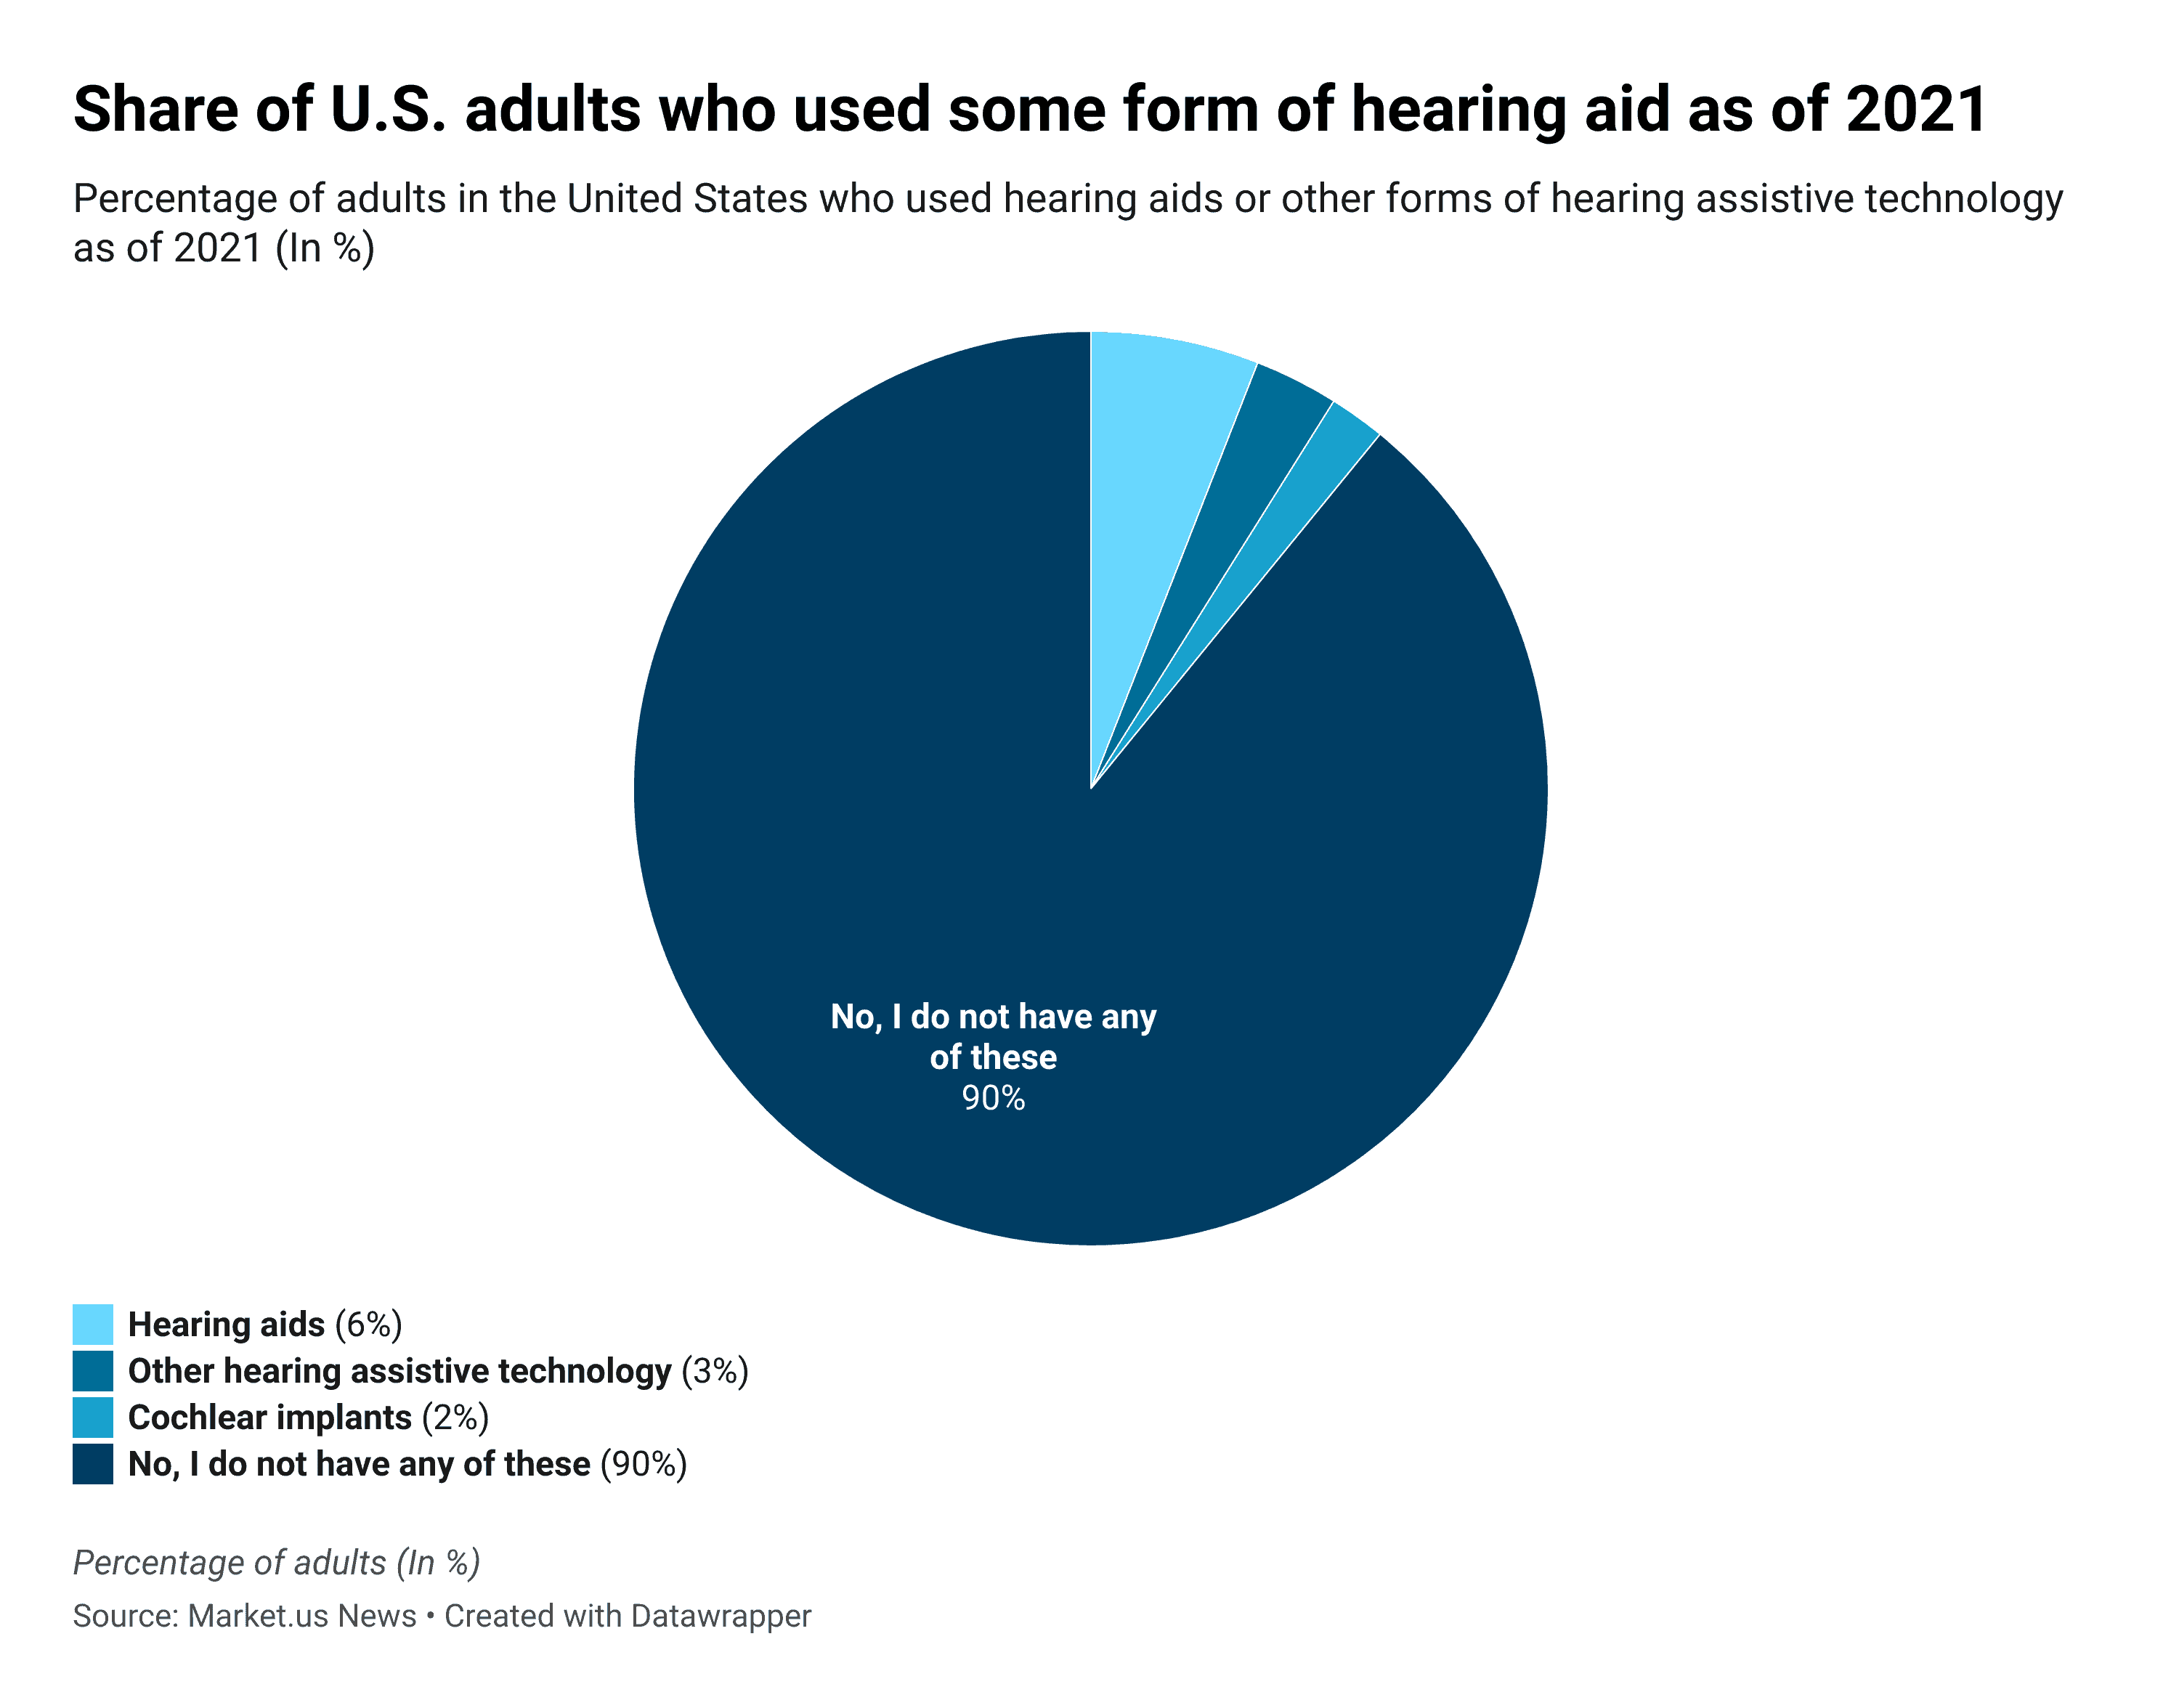 Hearing Loss Statistics